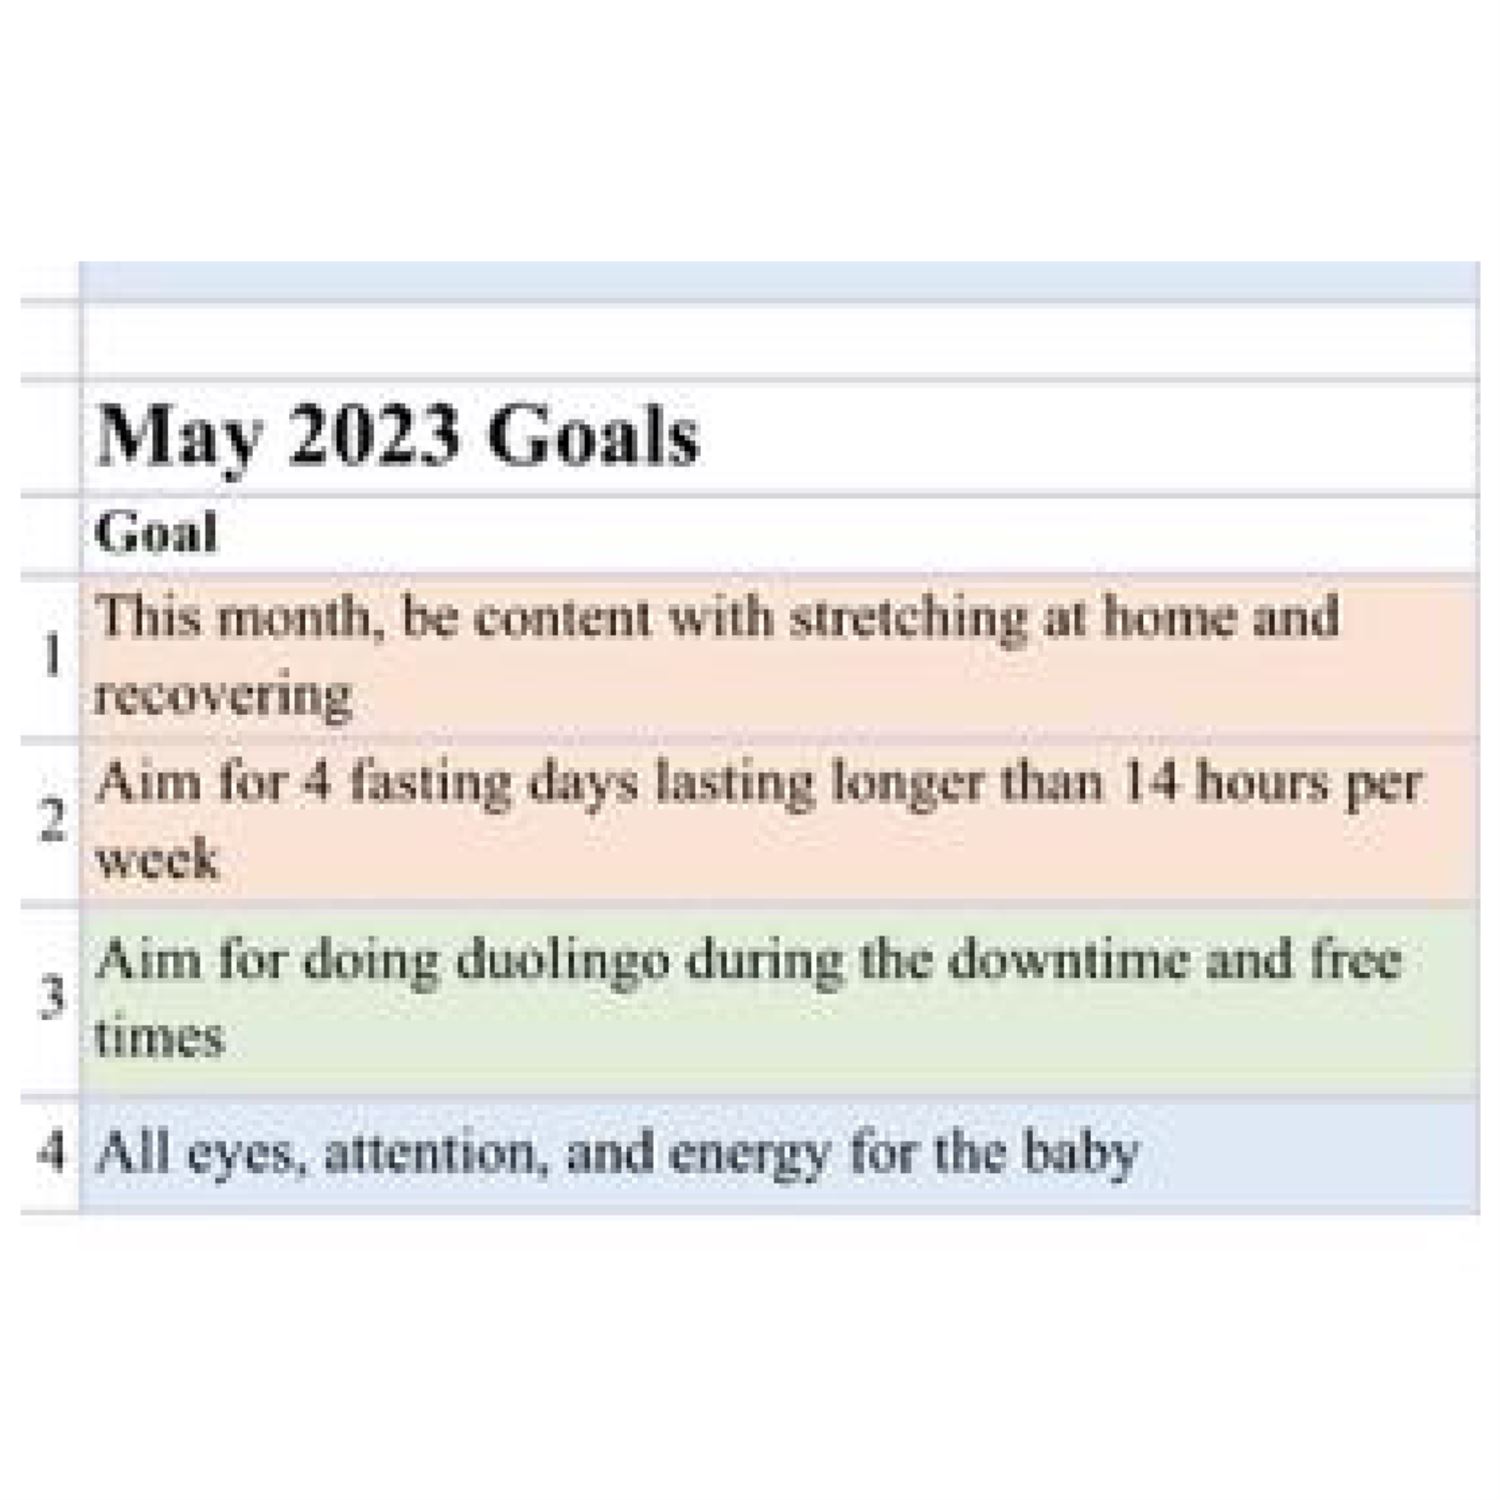 Juan's May 2023 Goals